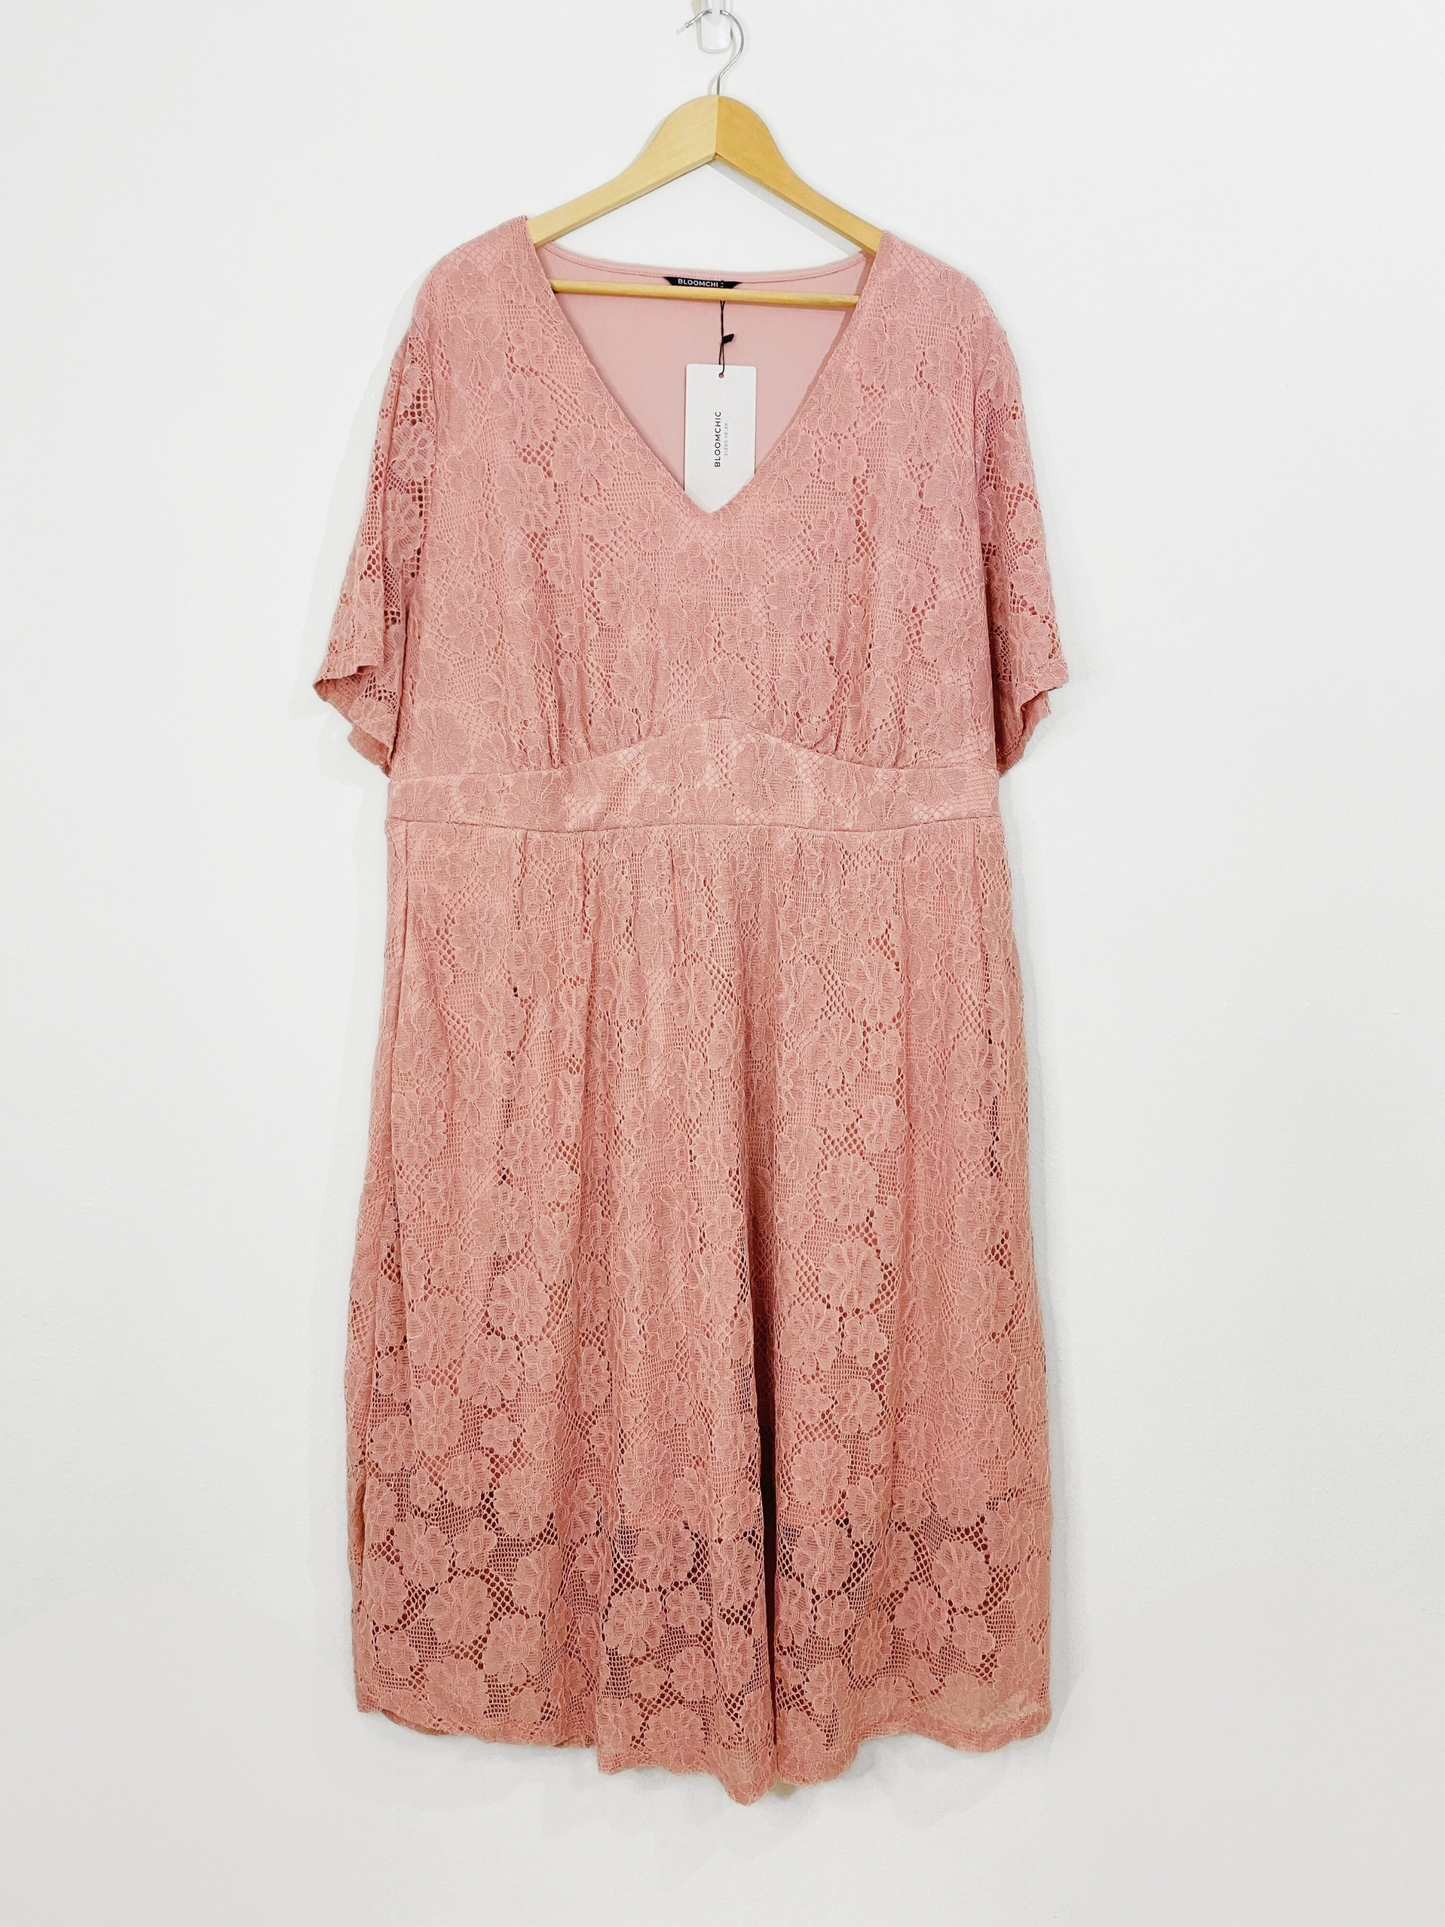 Pink Lace A-line Dress (Size 22-24)